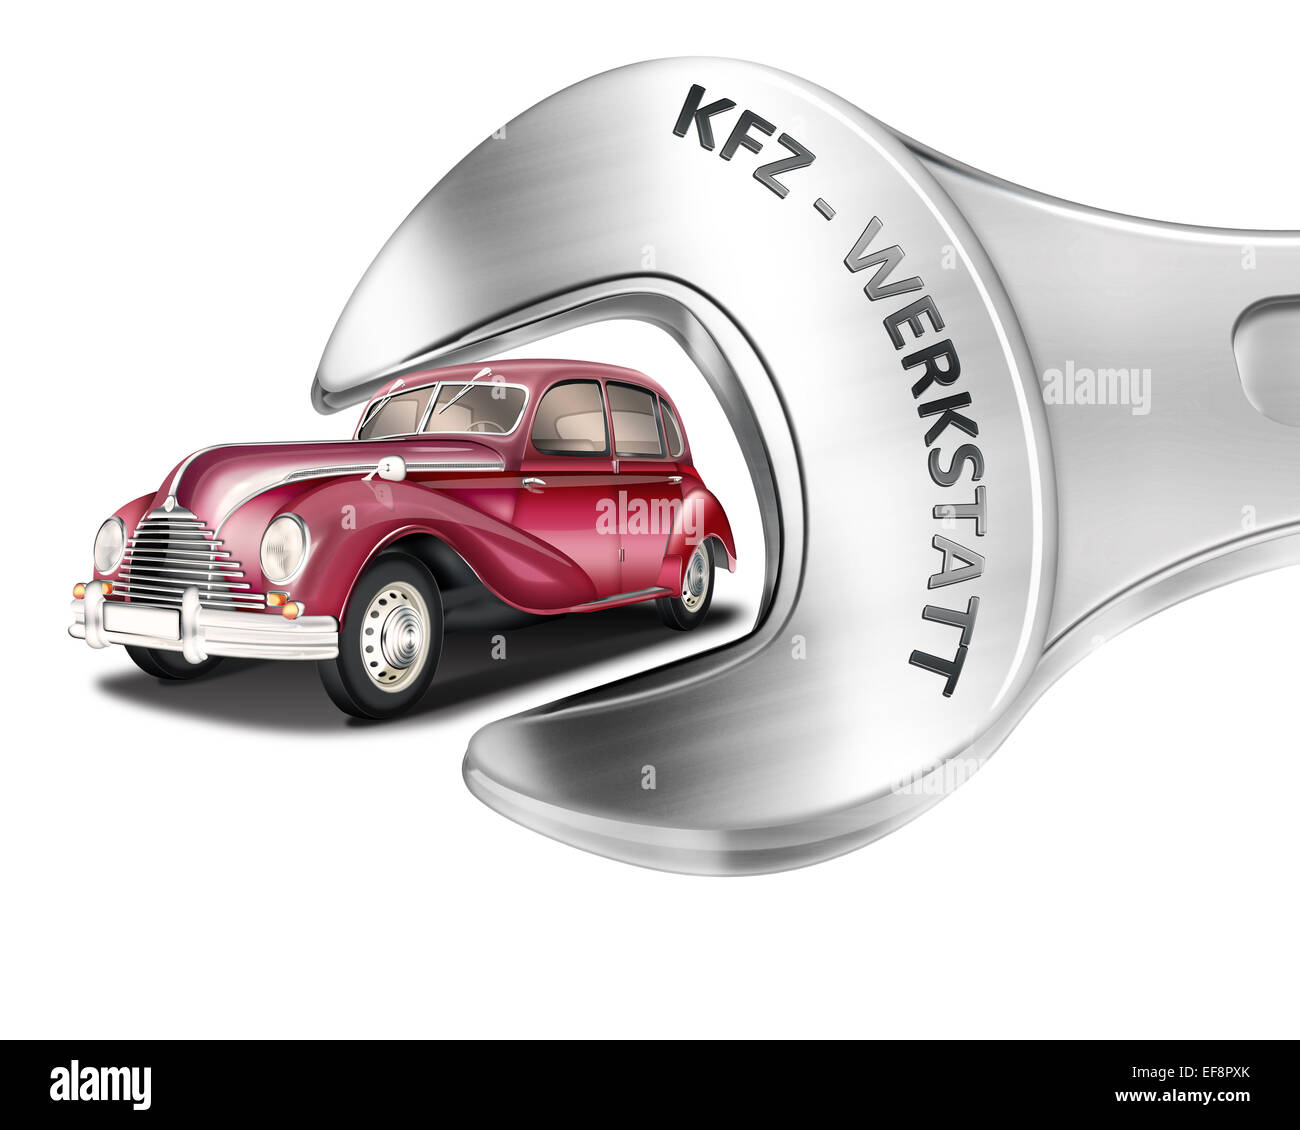 Wrench, car, word 'Kfz-Werkstatt', German for car workshop, illustration Stock Photo